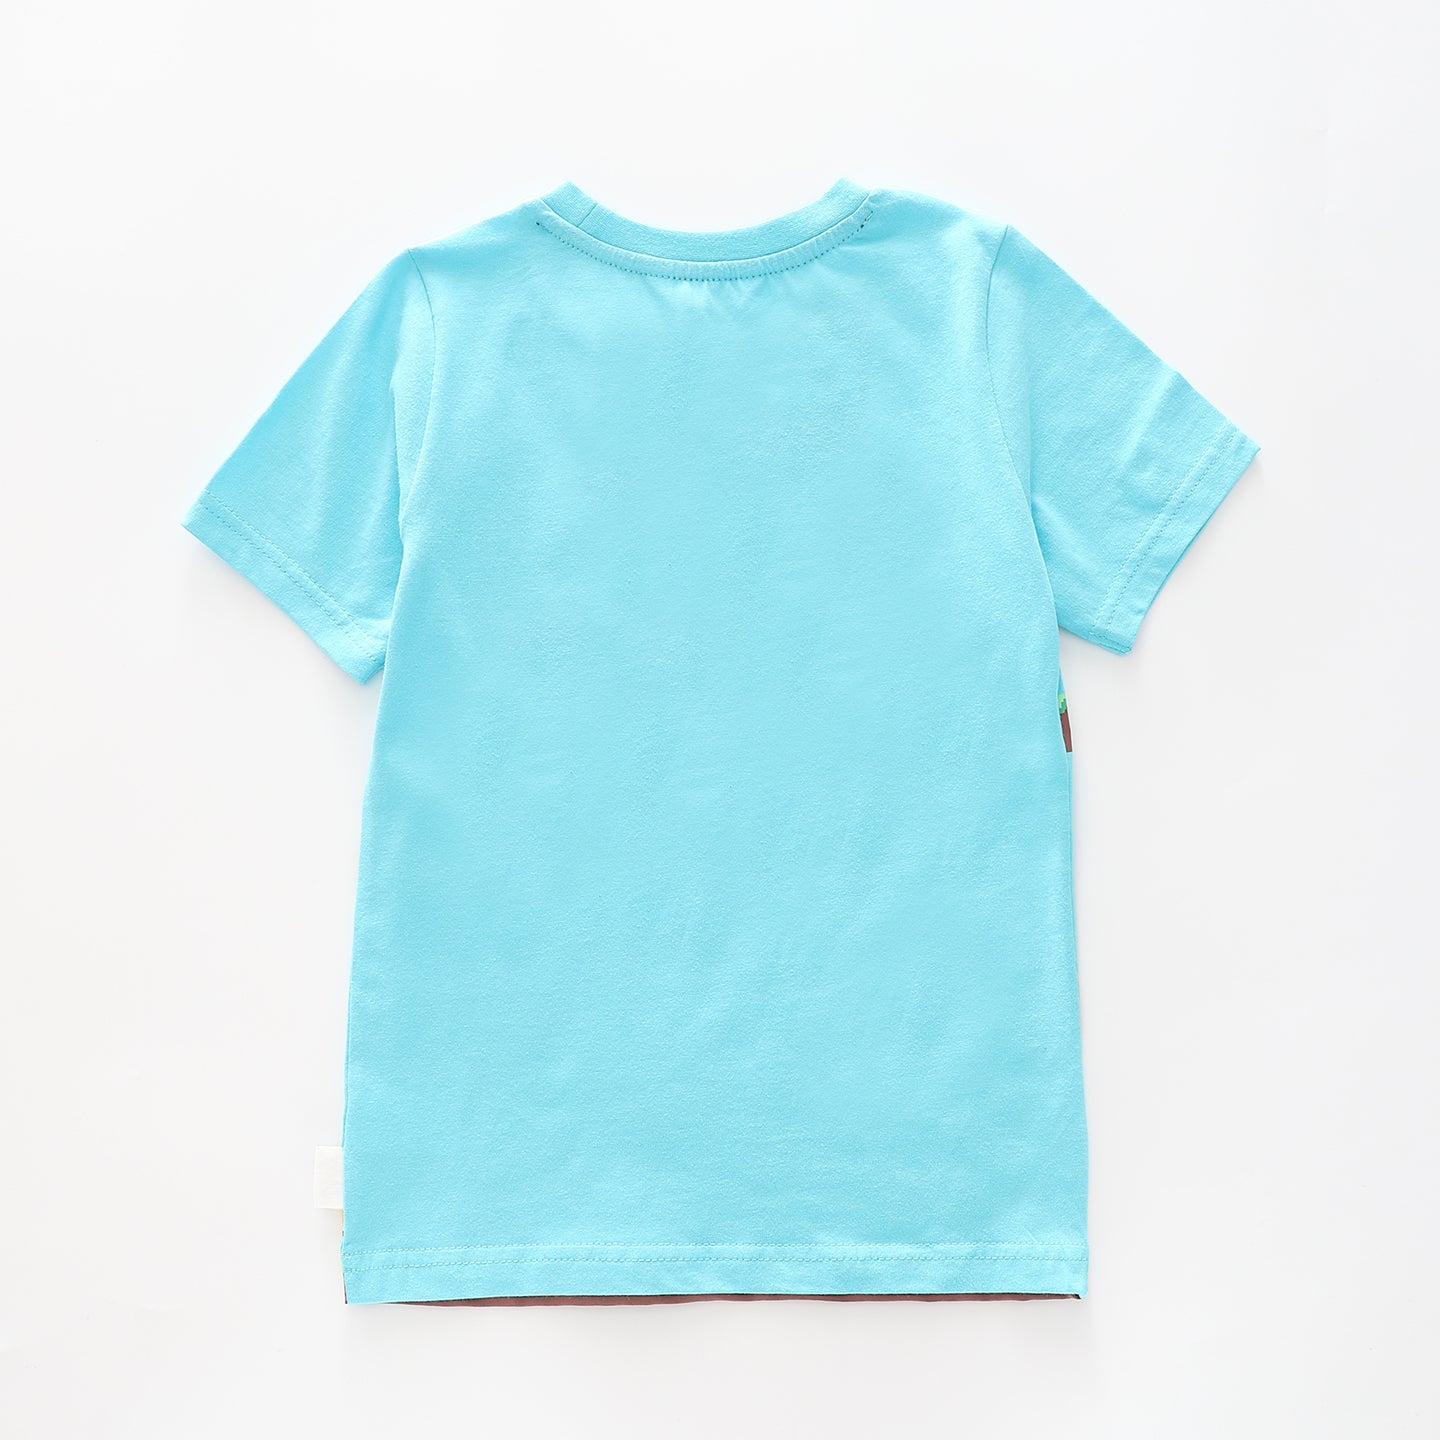 Boy's Sky Blue T-shirt With Pixel Dinosaur Print